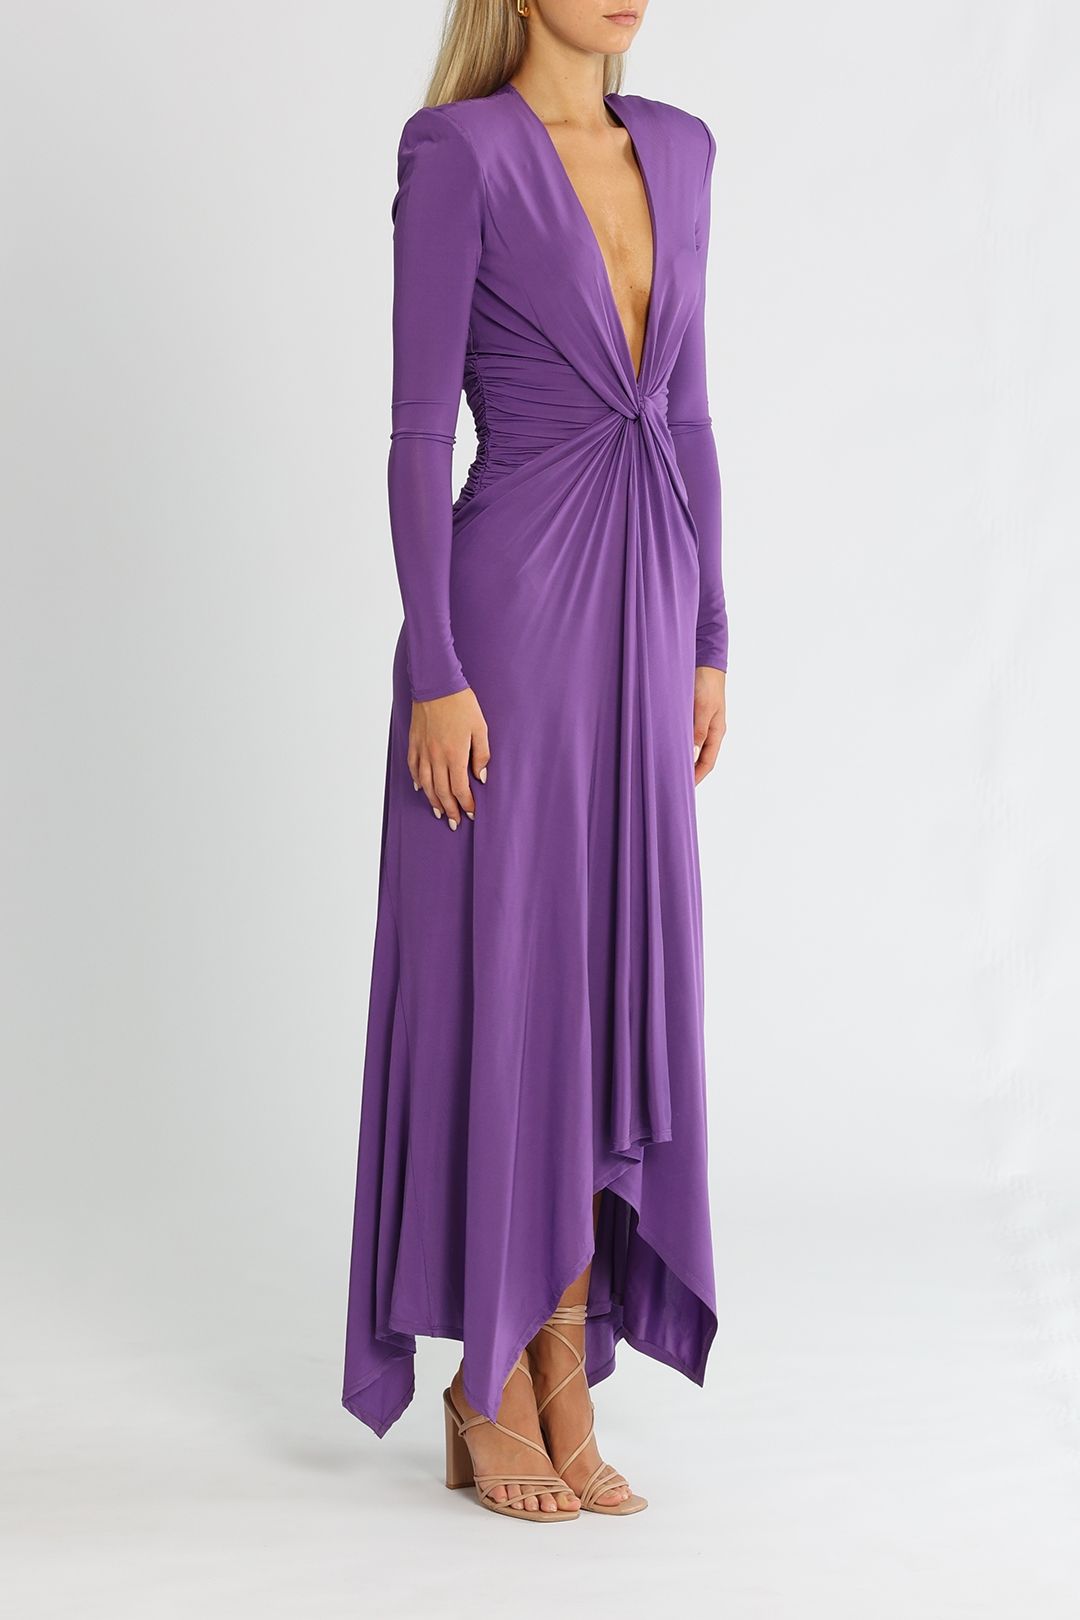 Ronny Kobo Stormy Dress Purple Asymmetrical